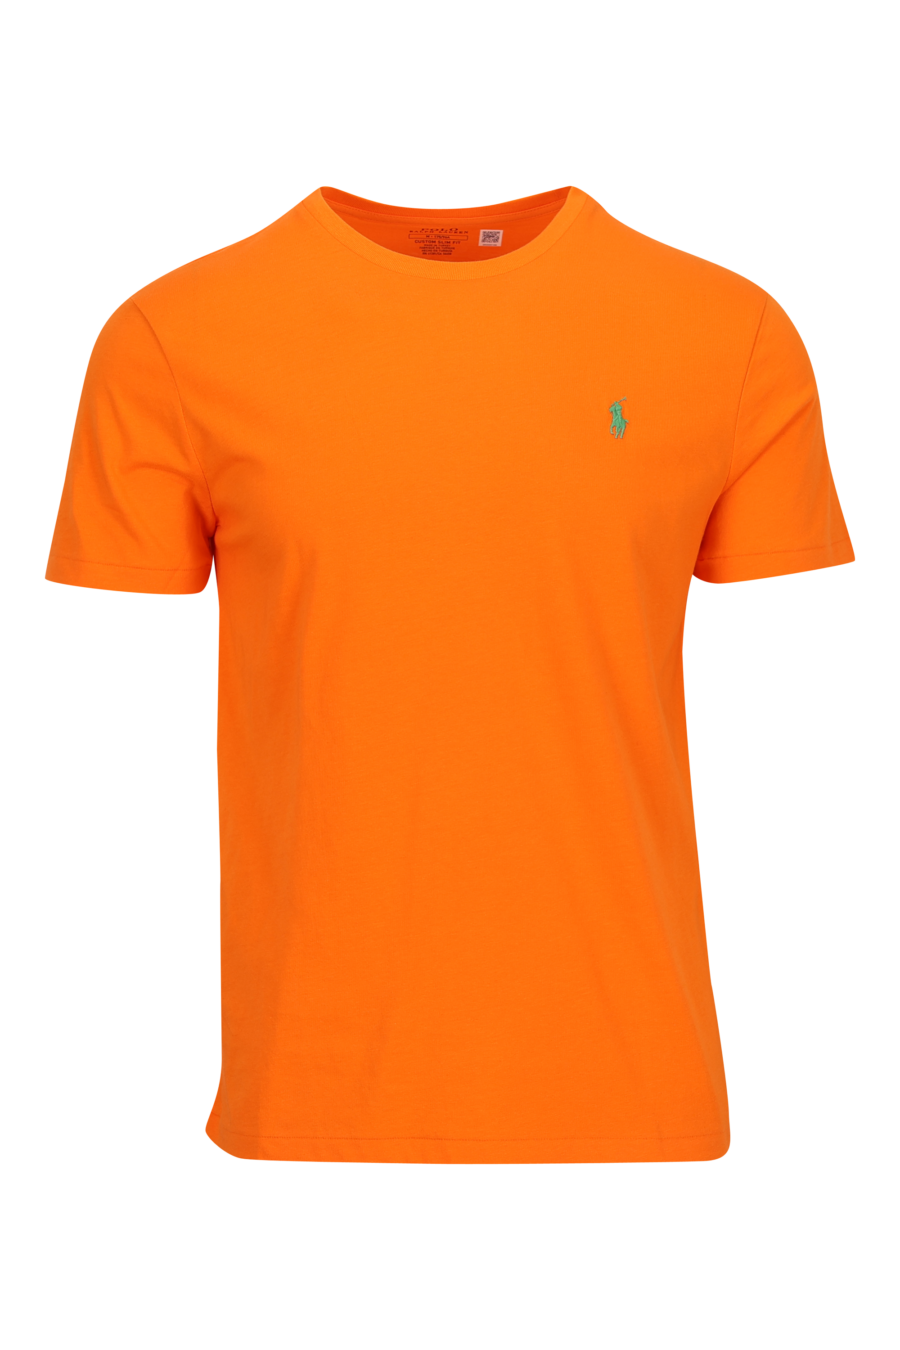 Camiseta naranja y verde con minilogo "polo" - 3616536280914